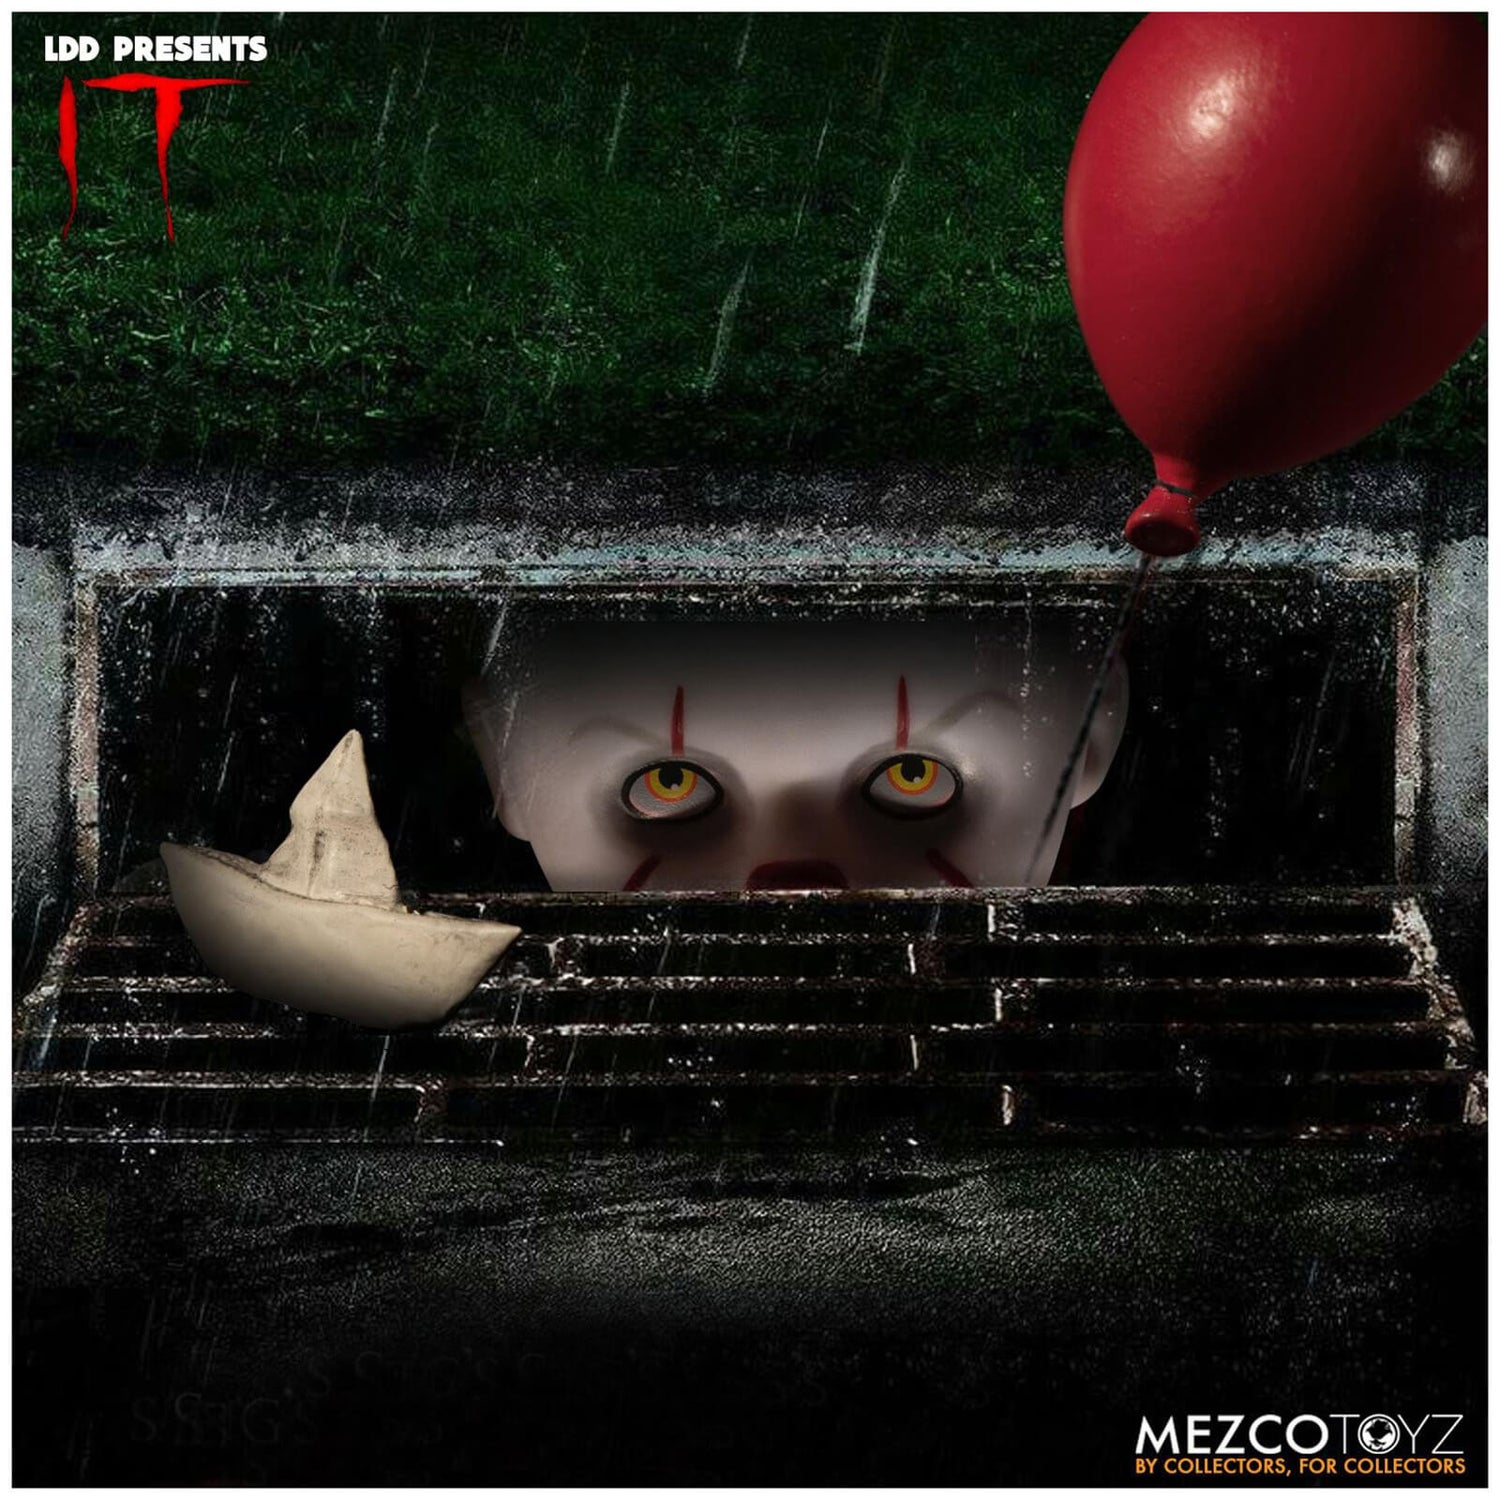 Mezco Living Dead Dolls Presents IT - Pennywise